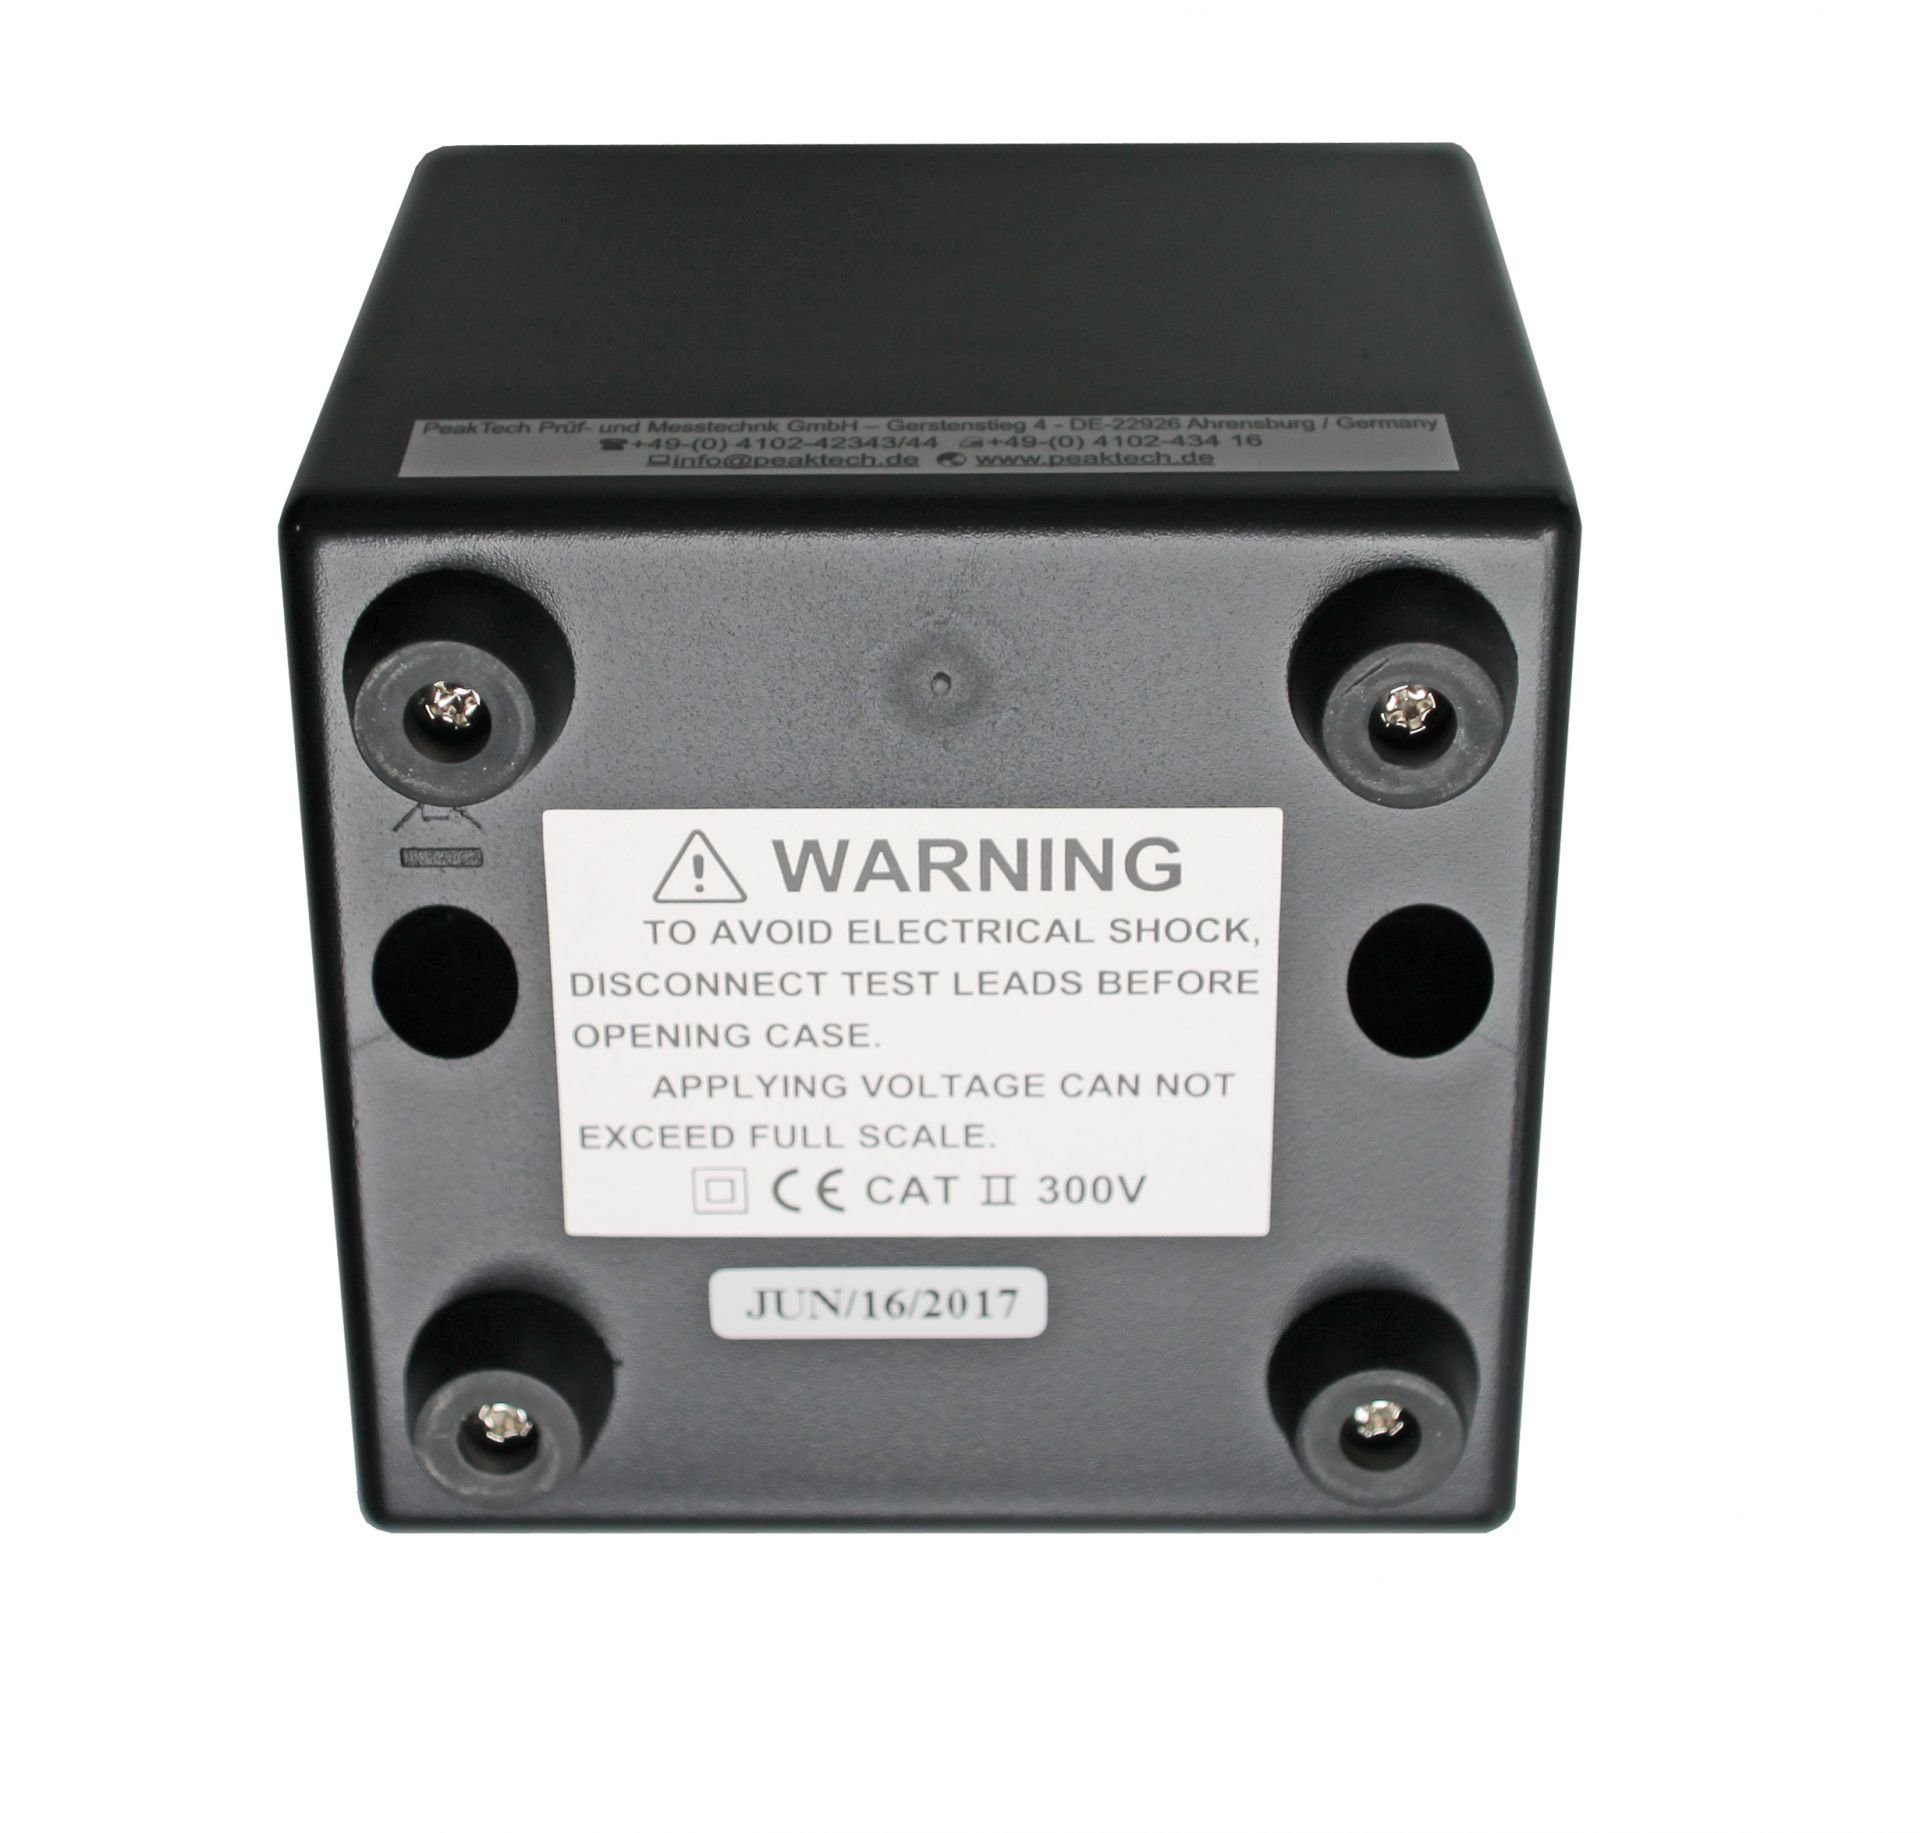 1-tlg. 0-1MA), PeakTech (ED-205 0-1 PeakTech mA 205-03: P Analog-Amperemeter Strommessgerät